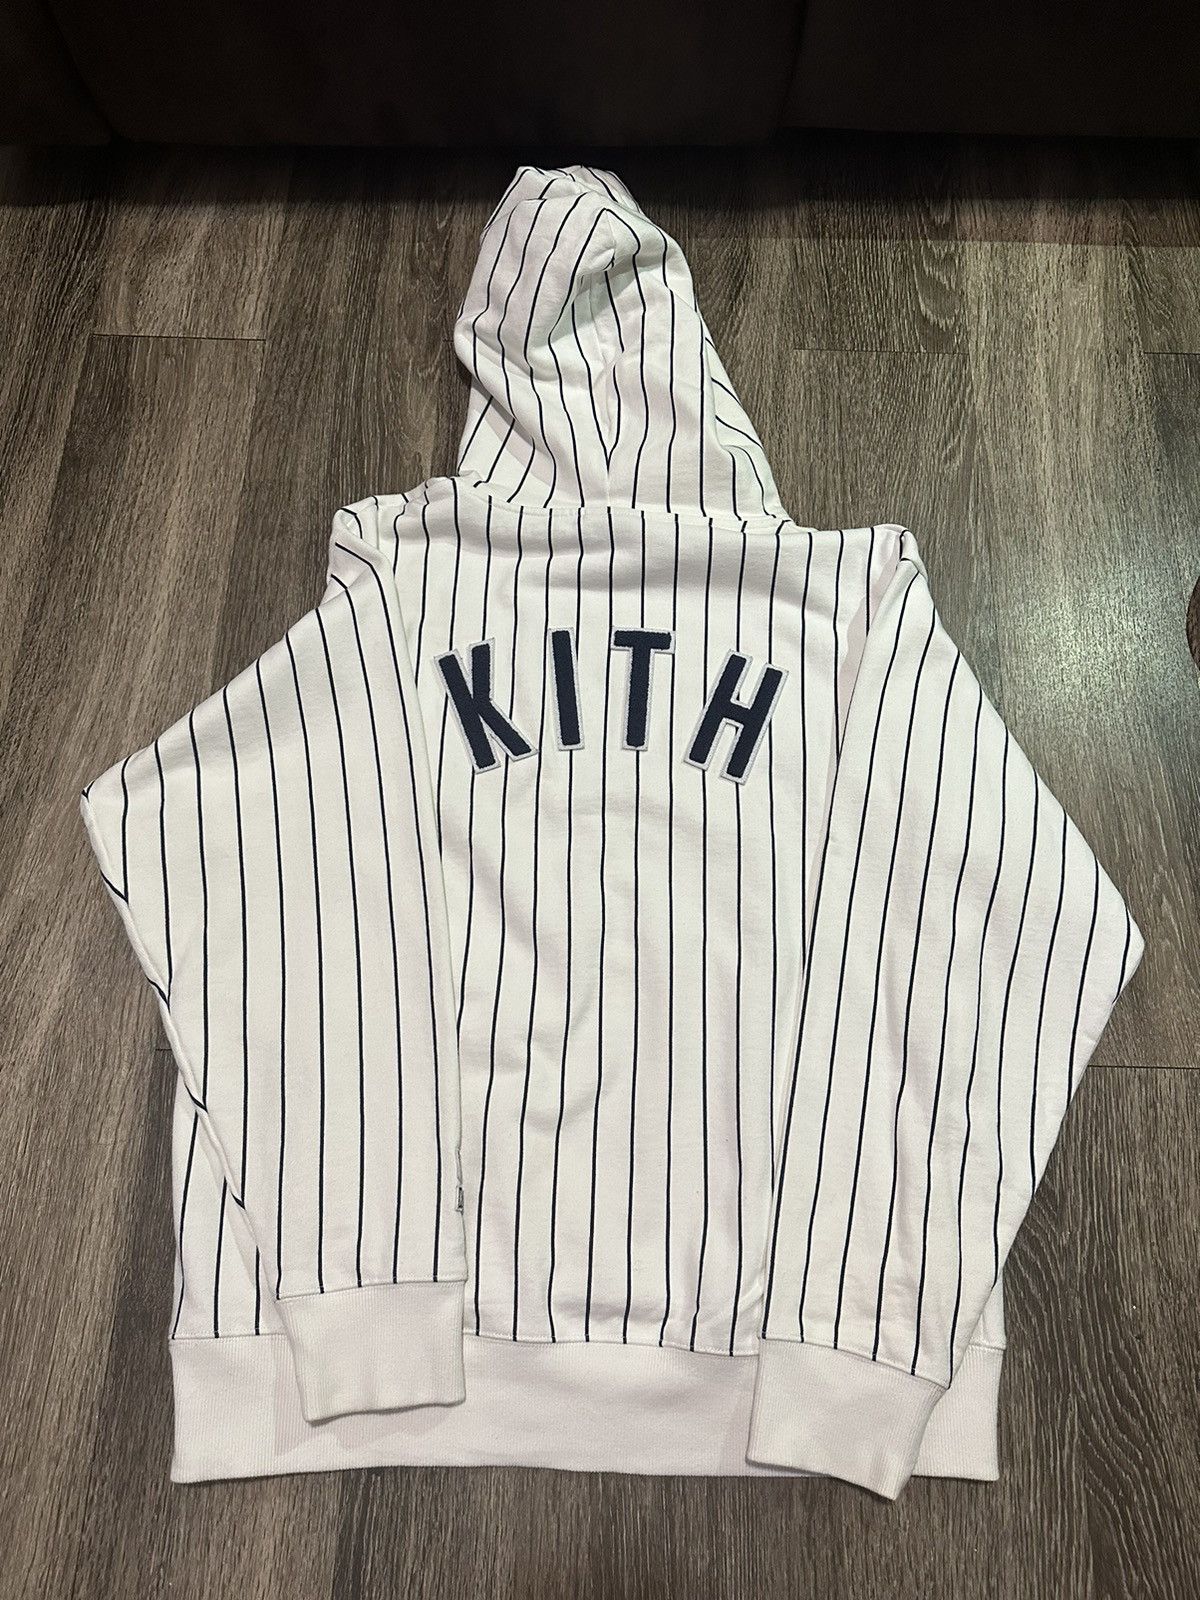 Kith Kith x New York Yankees Pinstripe Striped Hoodie | Grailed